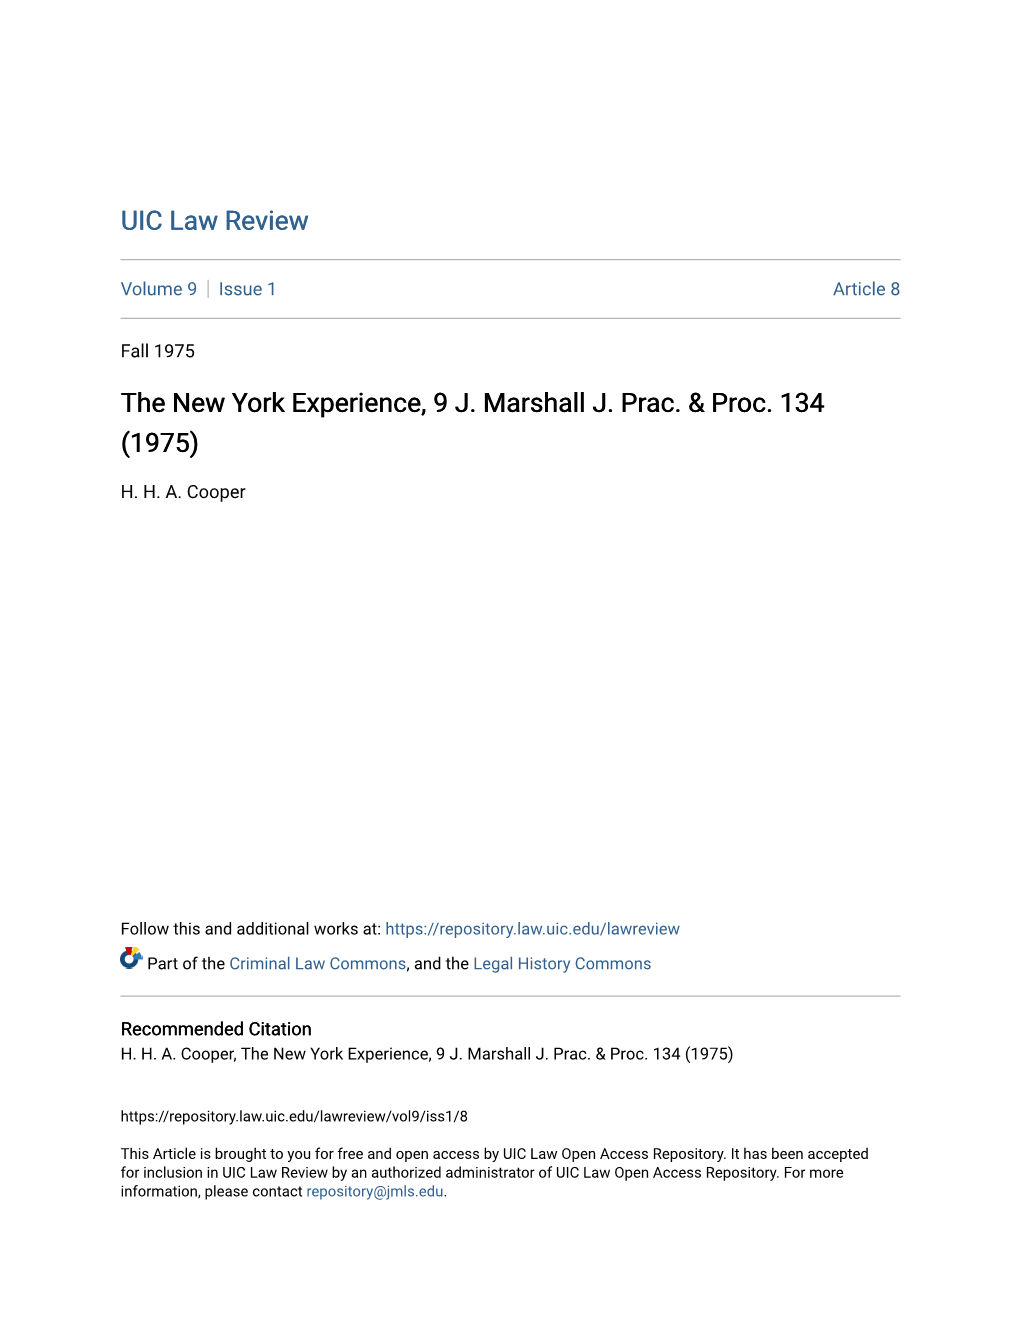 The New York Experience, 9 J. Marshall J. Prac. & Proc. 134 (1975)